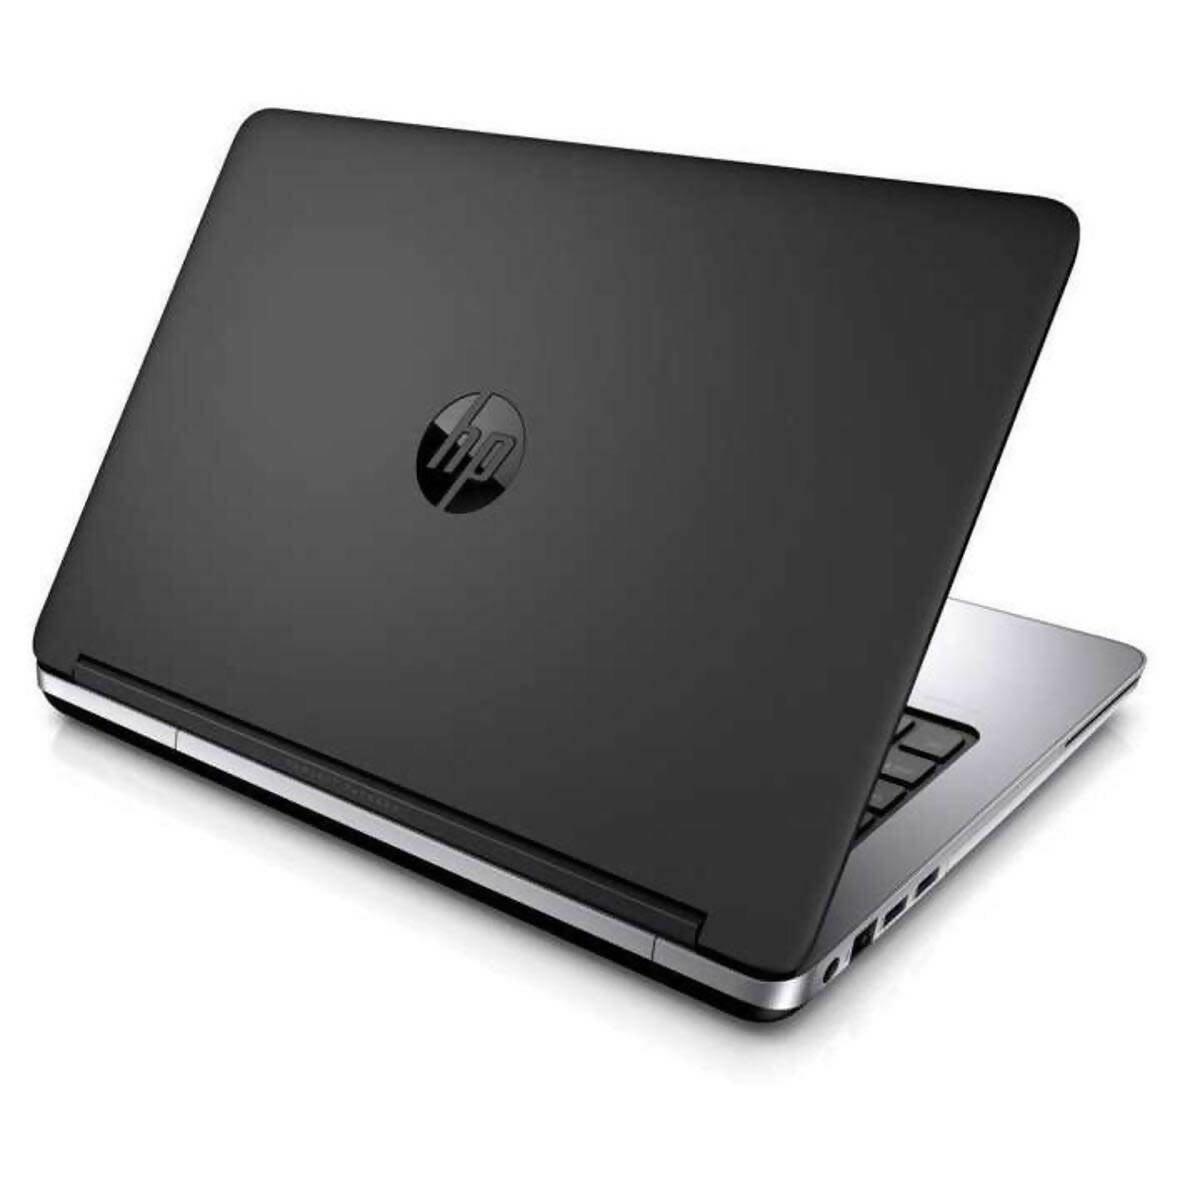 HP ProBook 640 G1 - Core i3 4th Generation - 4GB RAM - 500GB HDD - 14inch Screen - Window 10 Pro Active - ValueBox